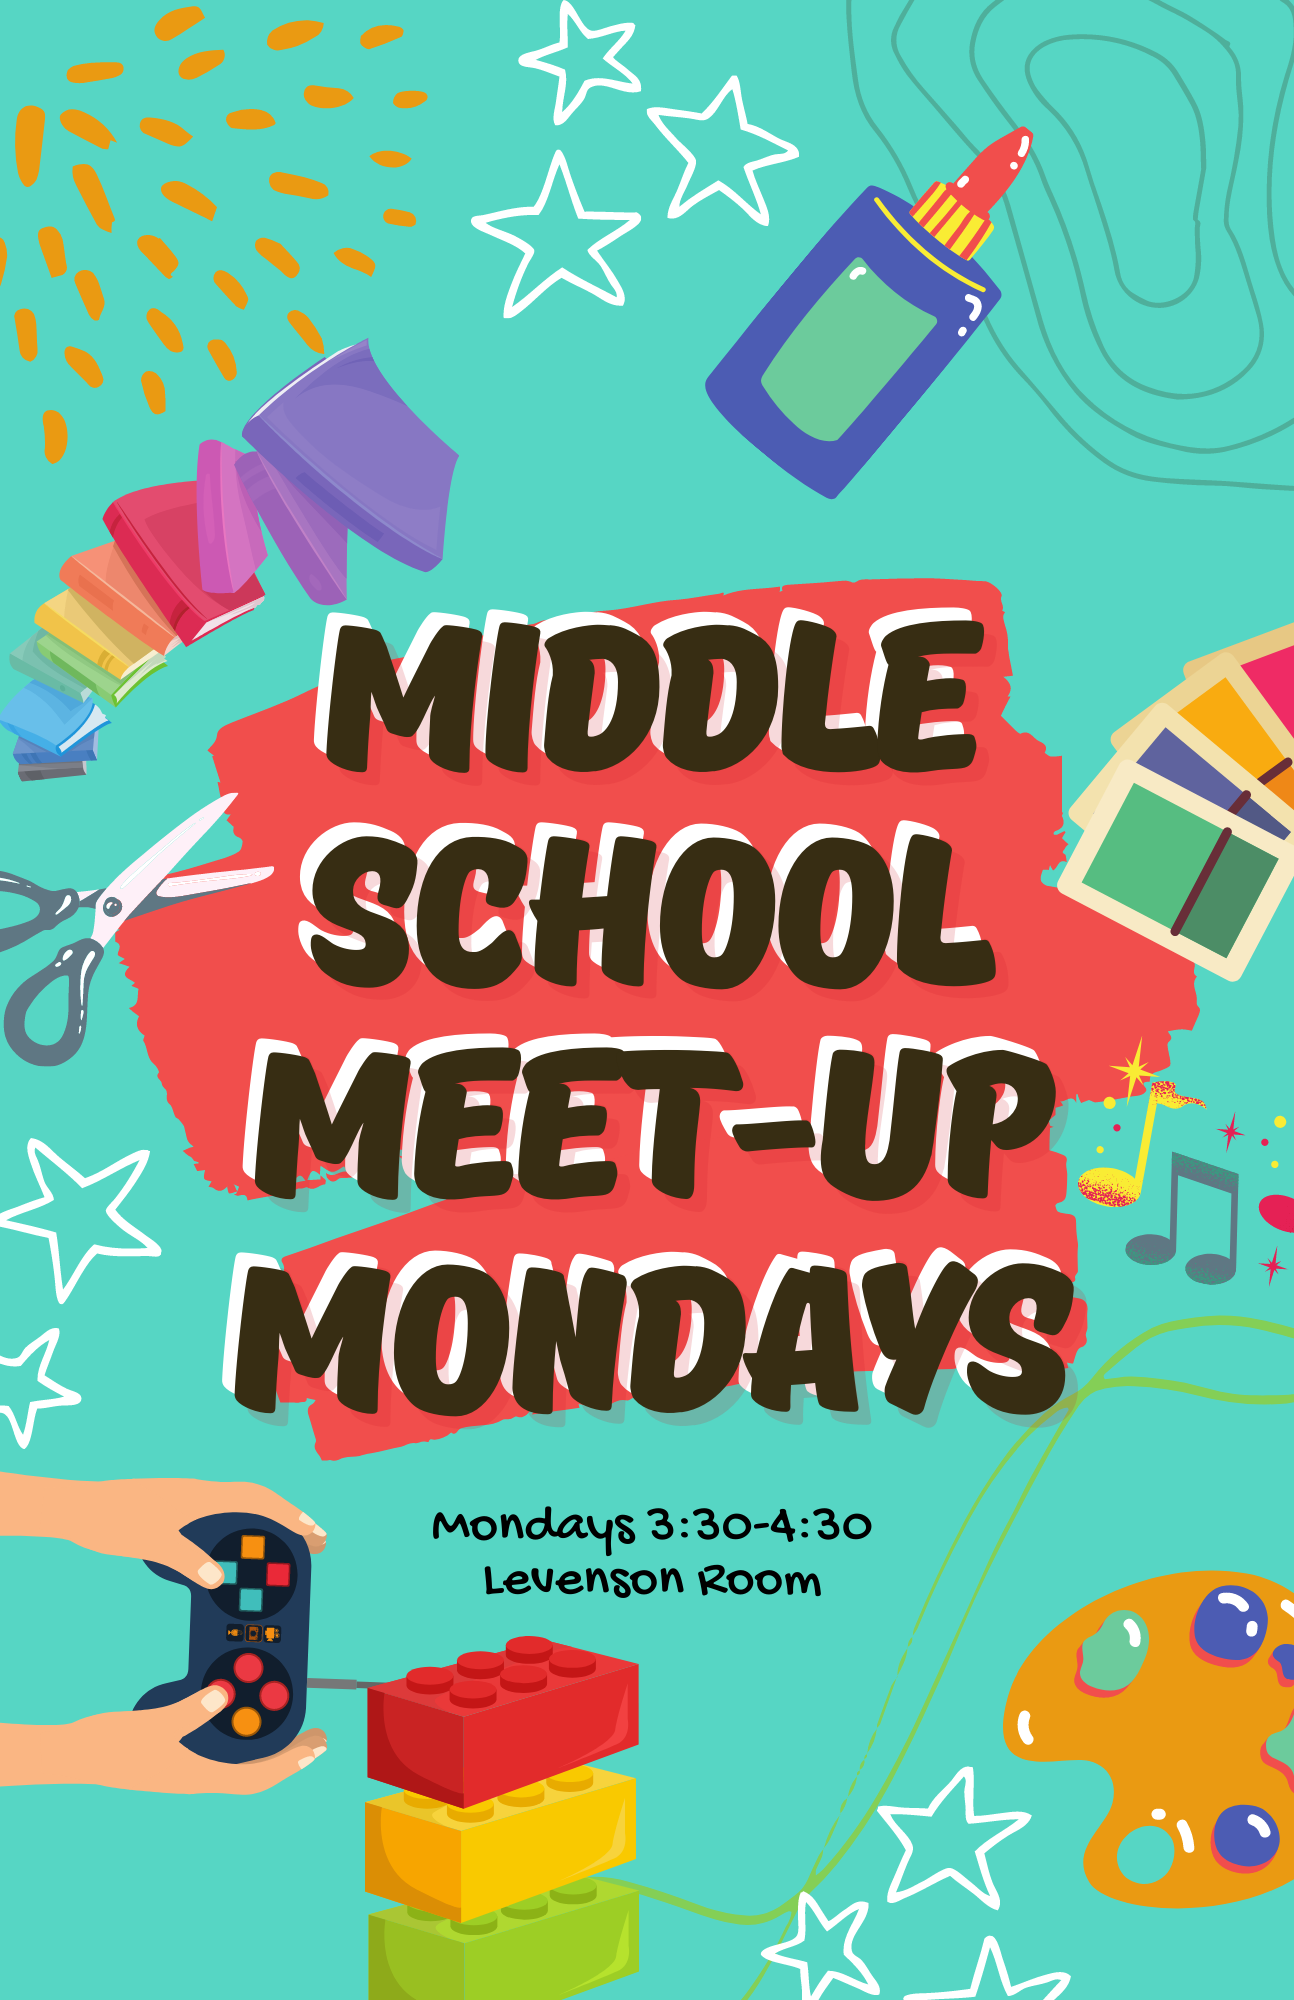 Middle School Meetup Mondays